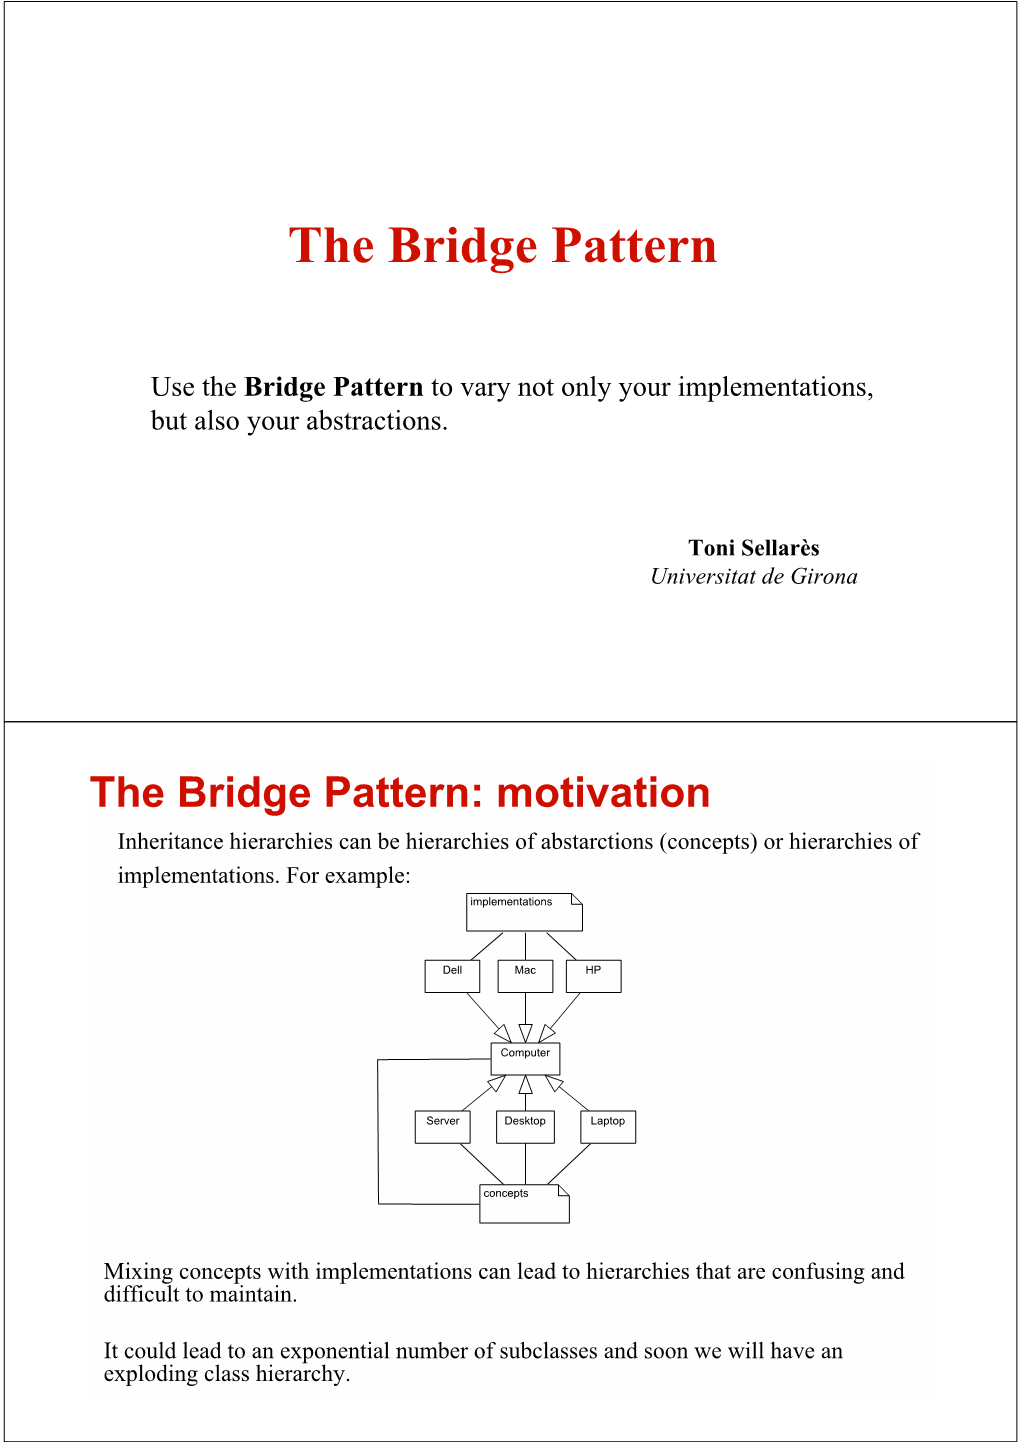 The Bridge Pattern